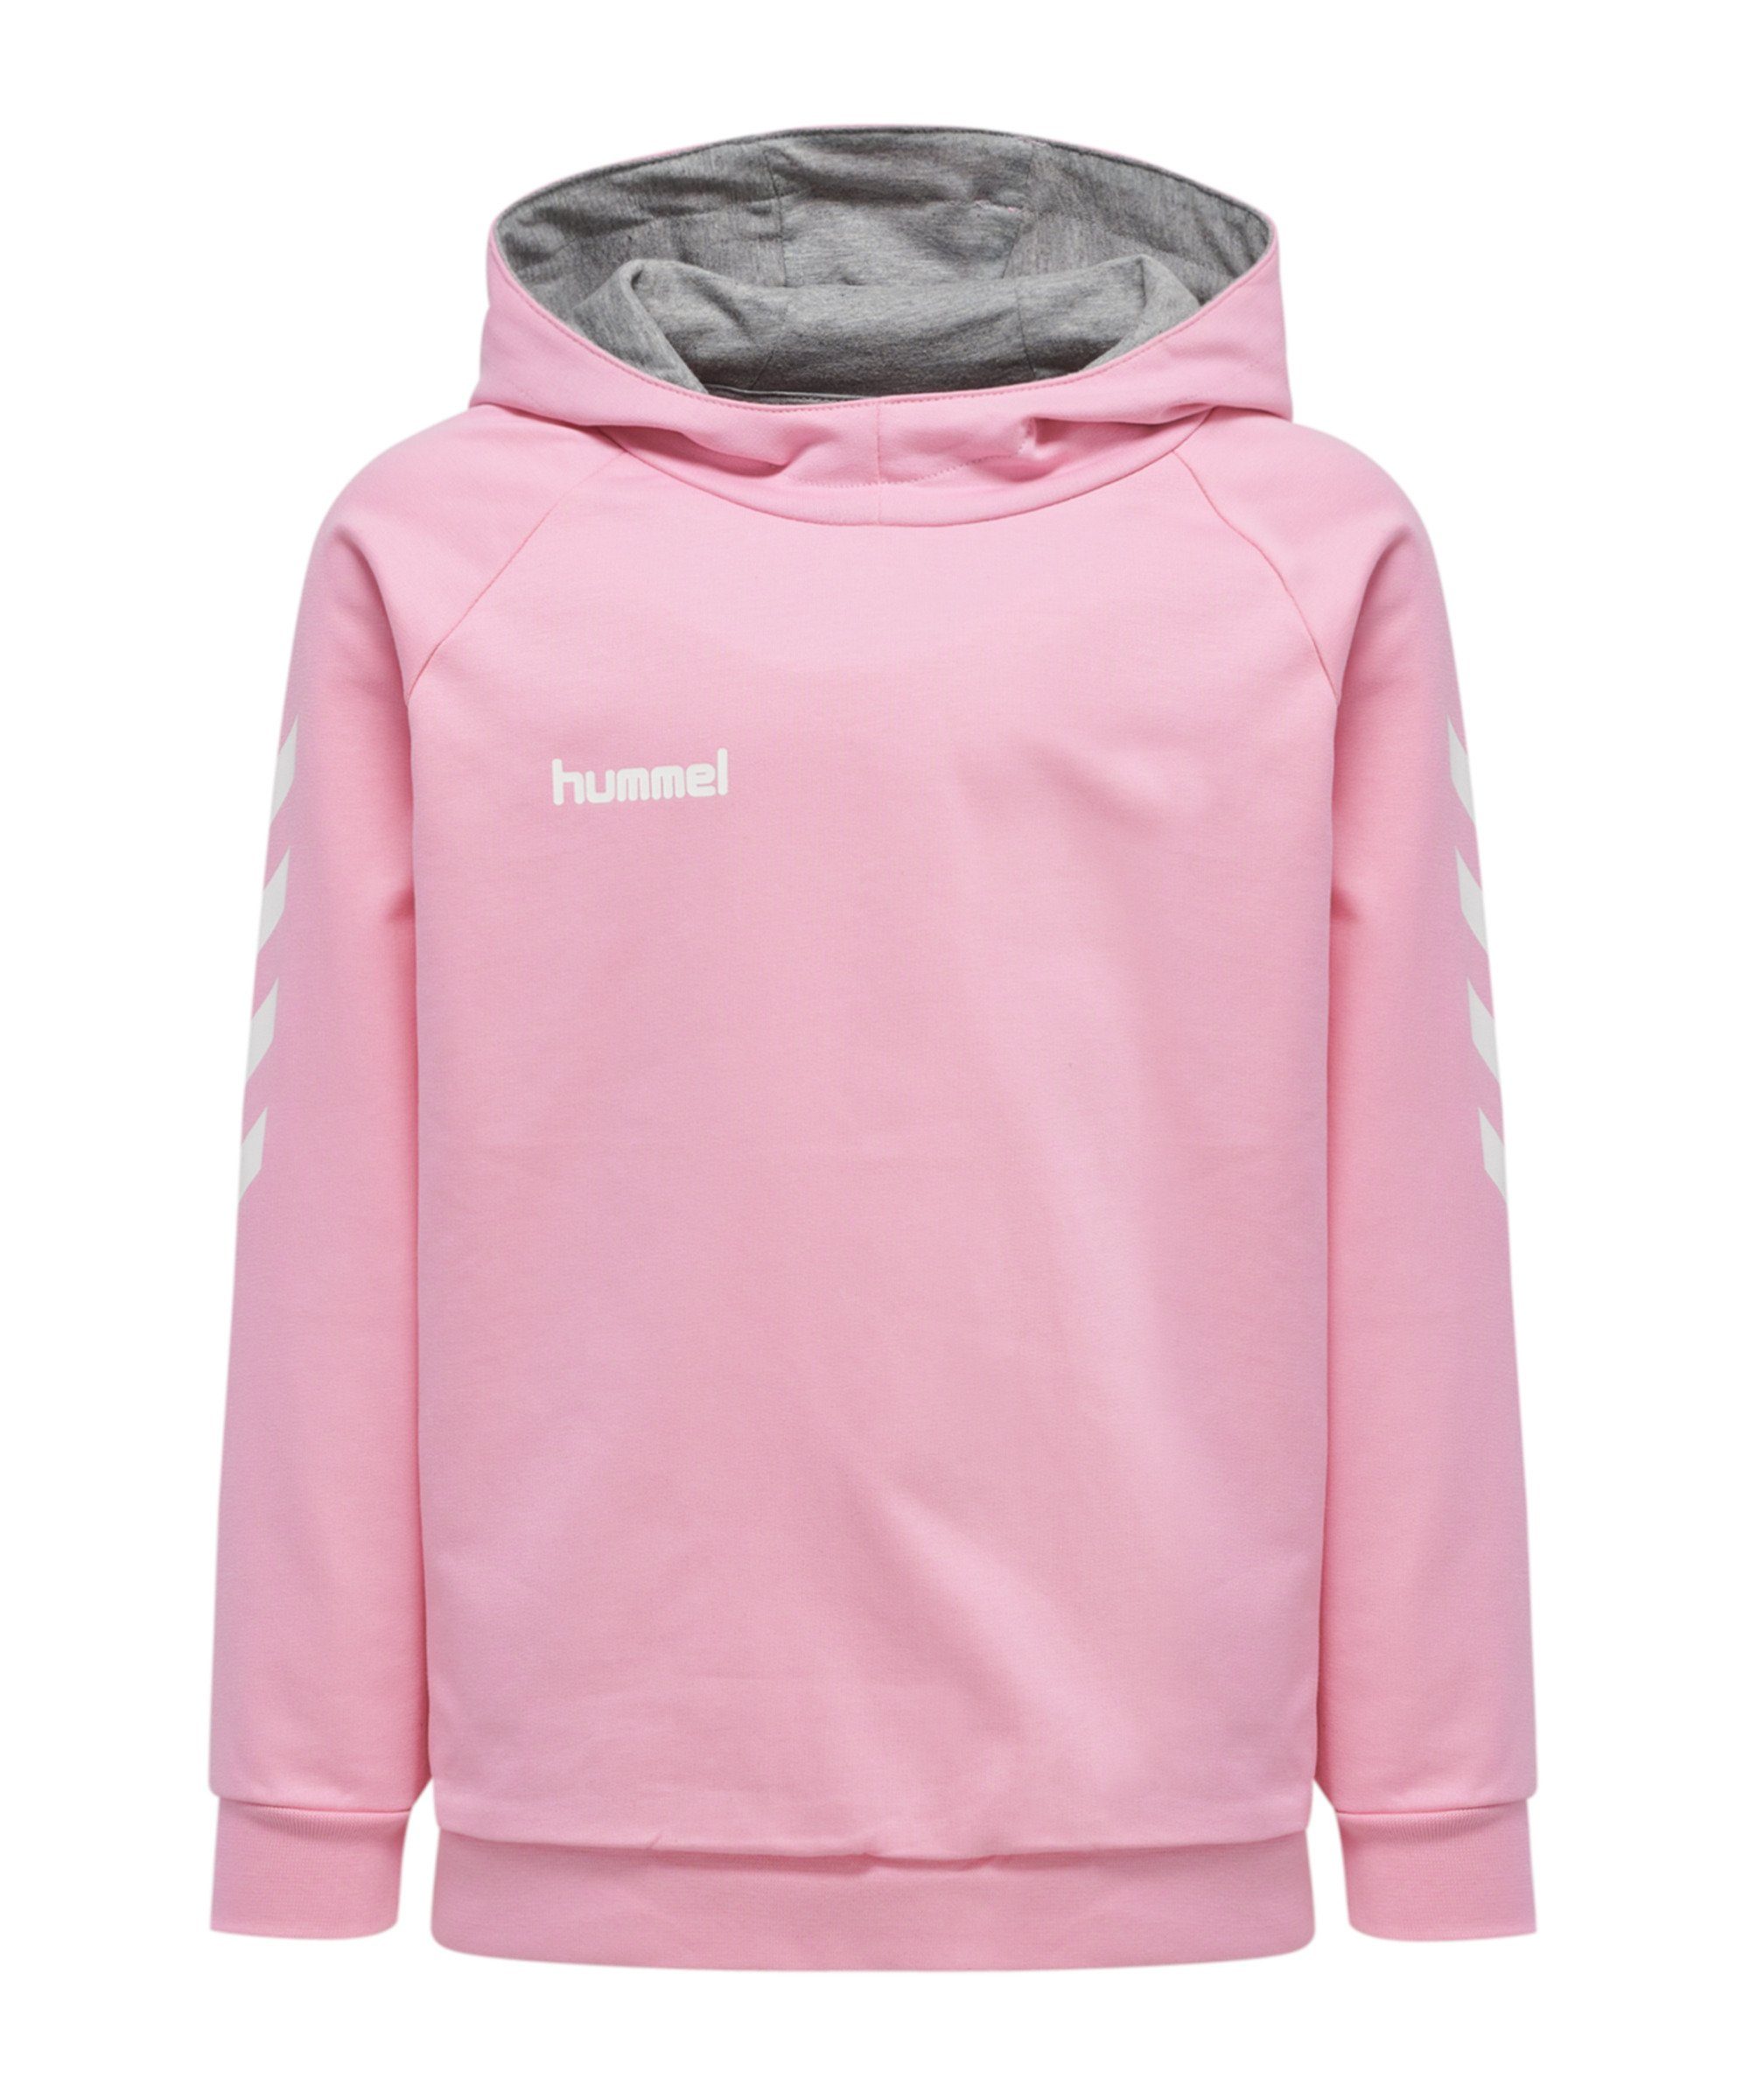 Hoody Sweatshirt rosa hummel Cotton Kids